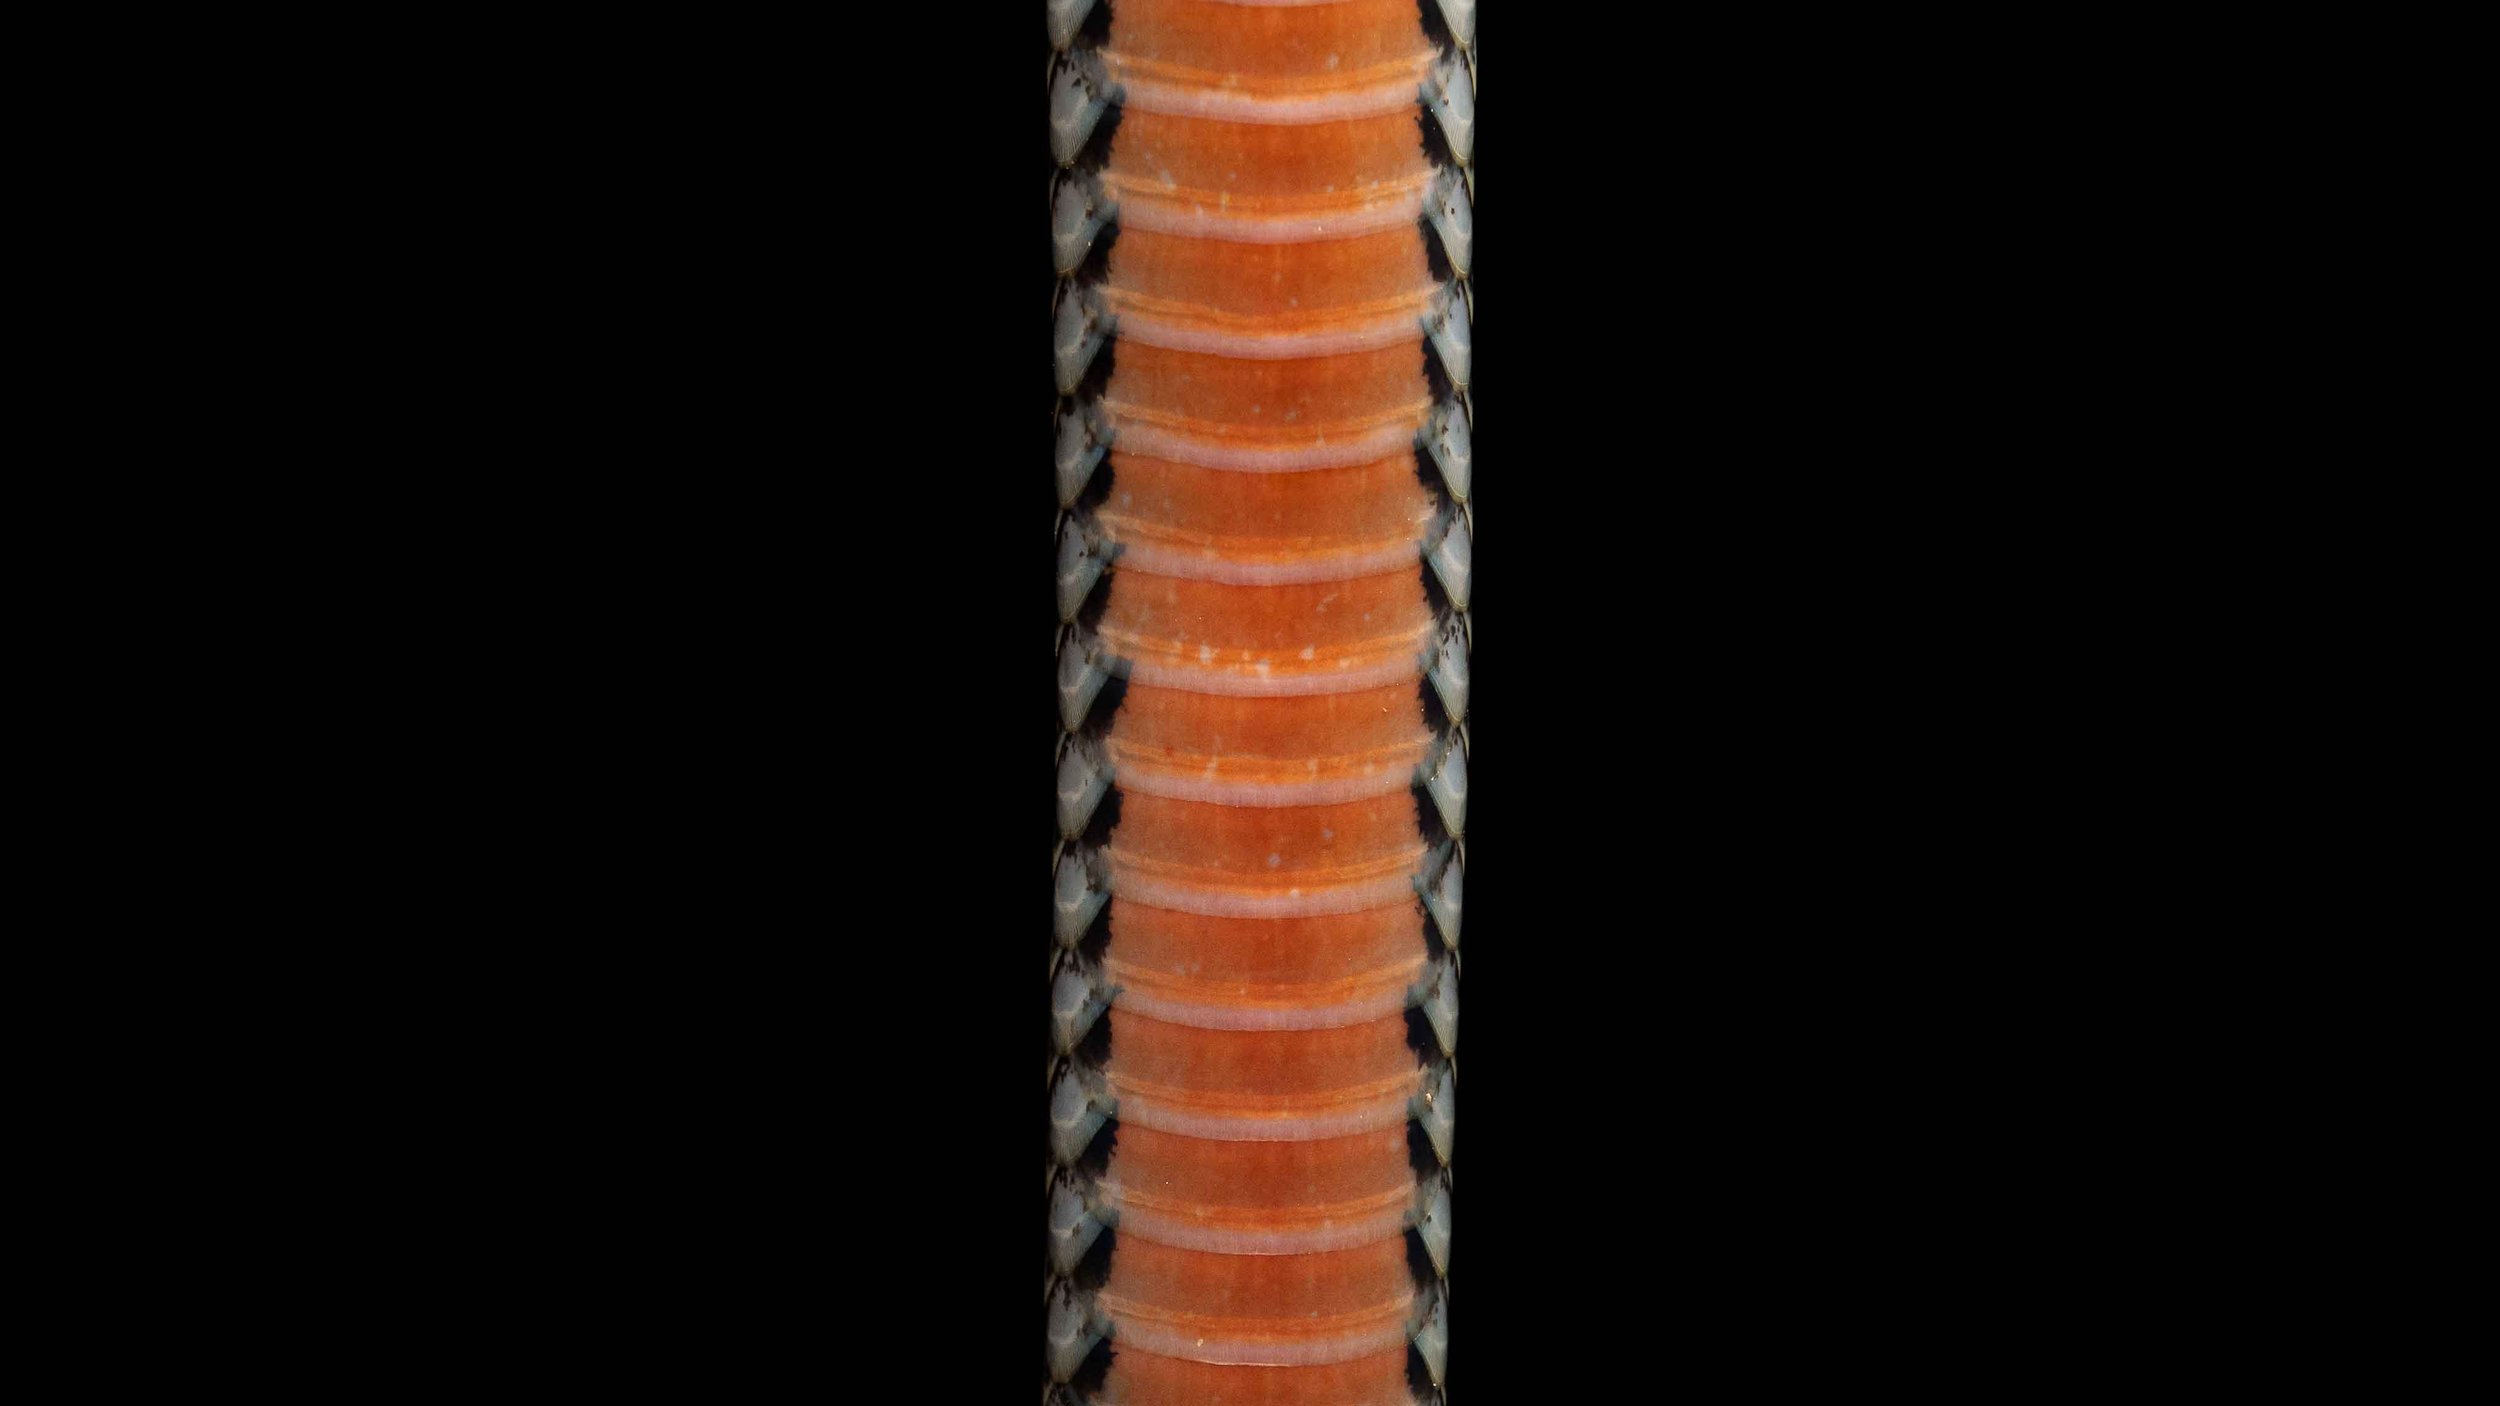 Northern Reed Snake - Calamaria septentrionalis